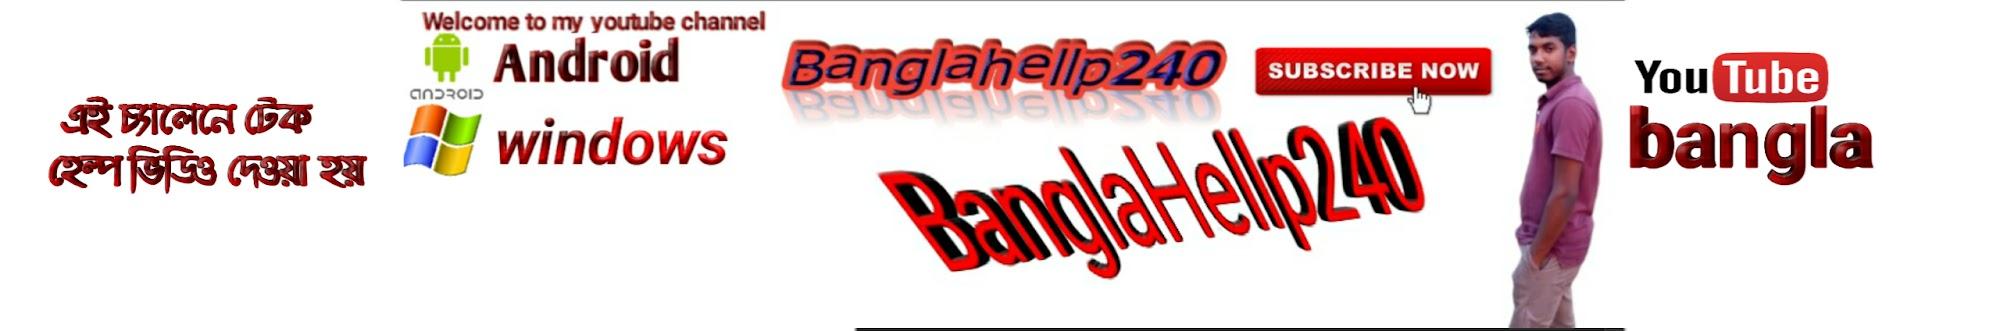 banglahellp240